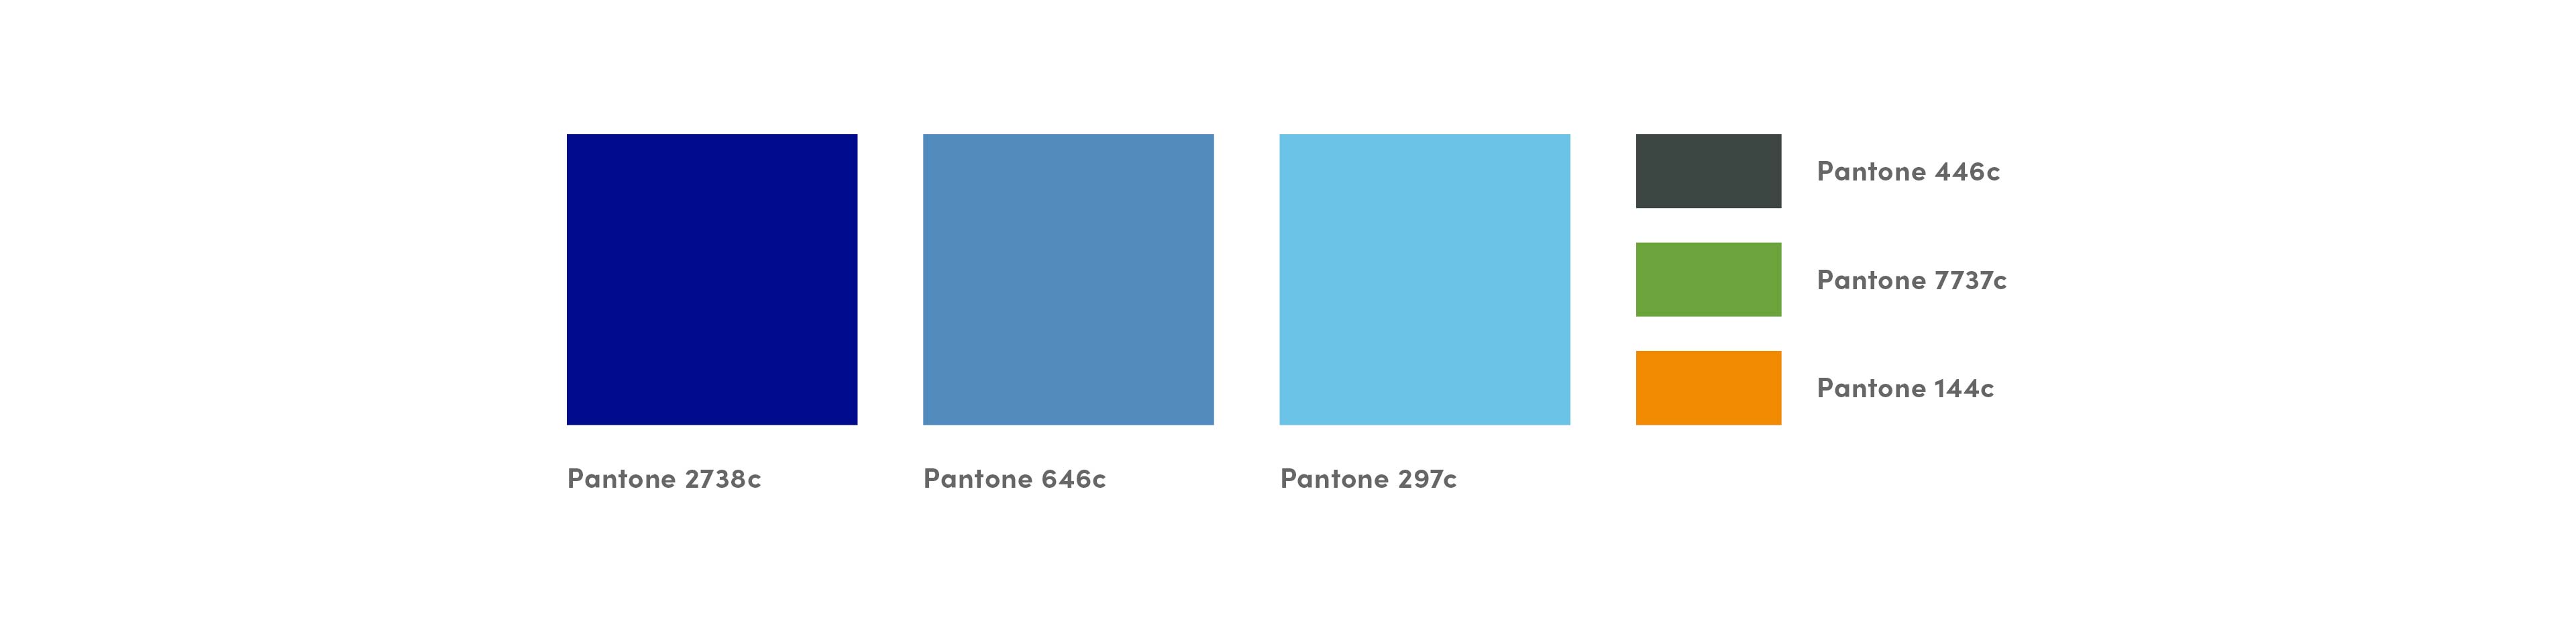 acro's color scheme includes 3 blue values with additional accent colors